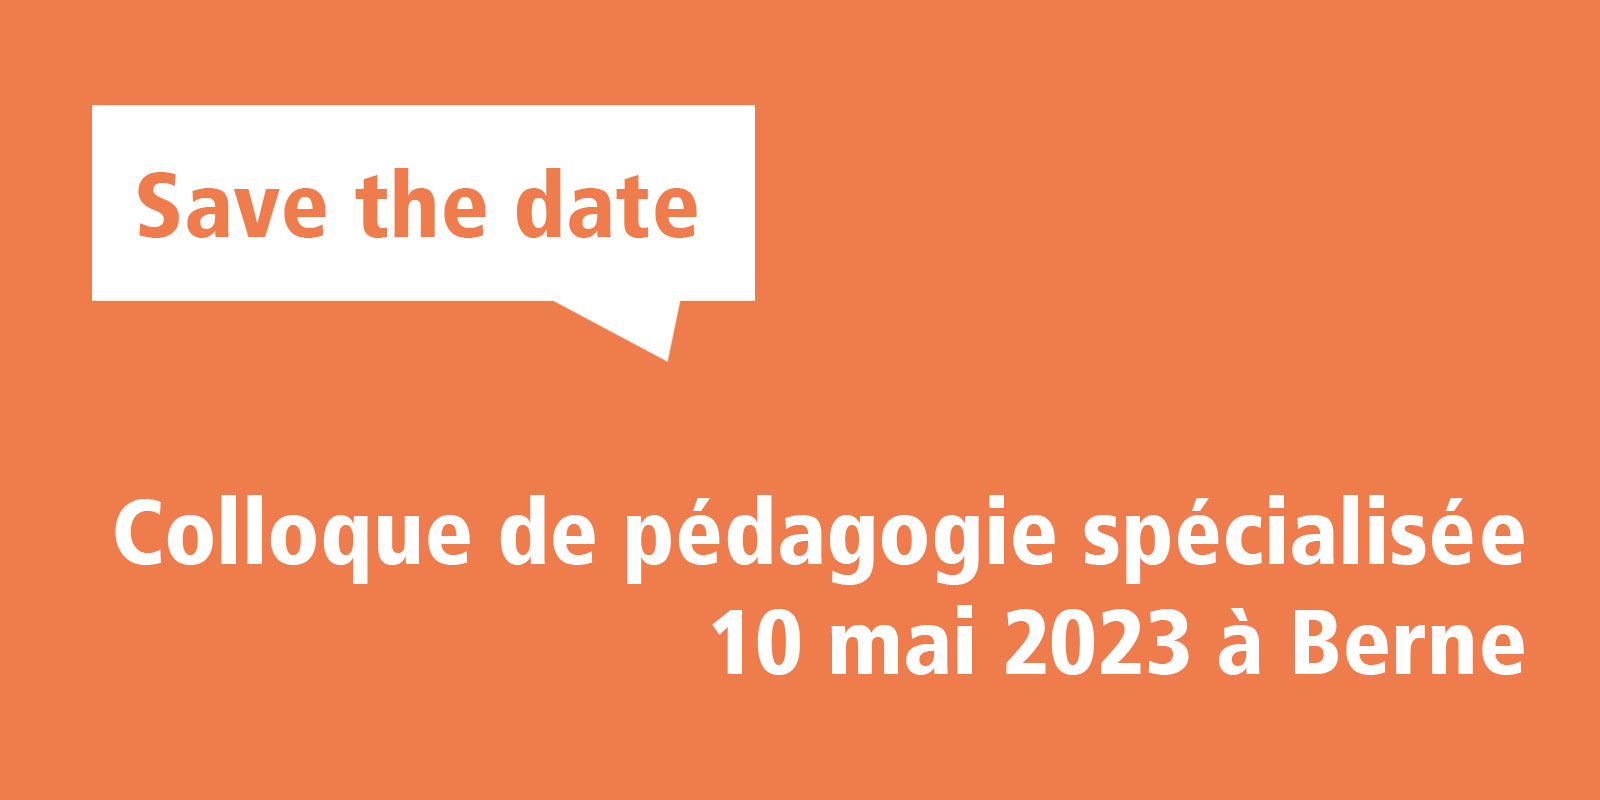 save the date tagung sonderpaedagogik 2023 FR